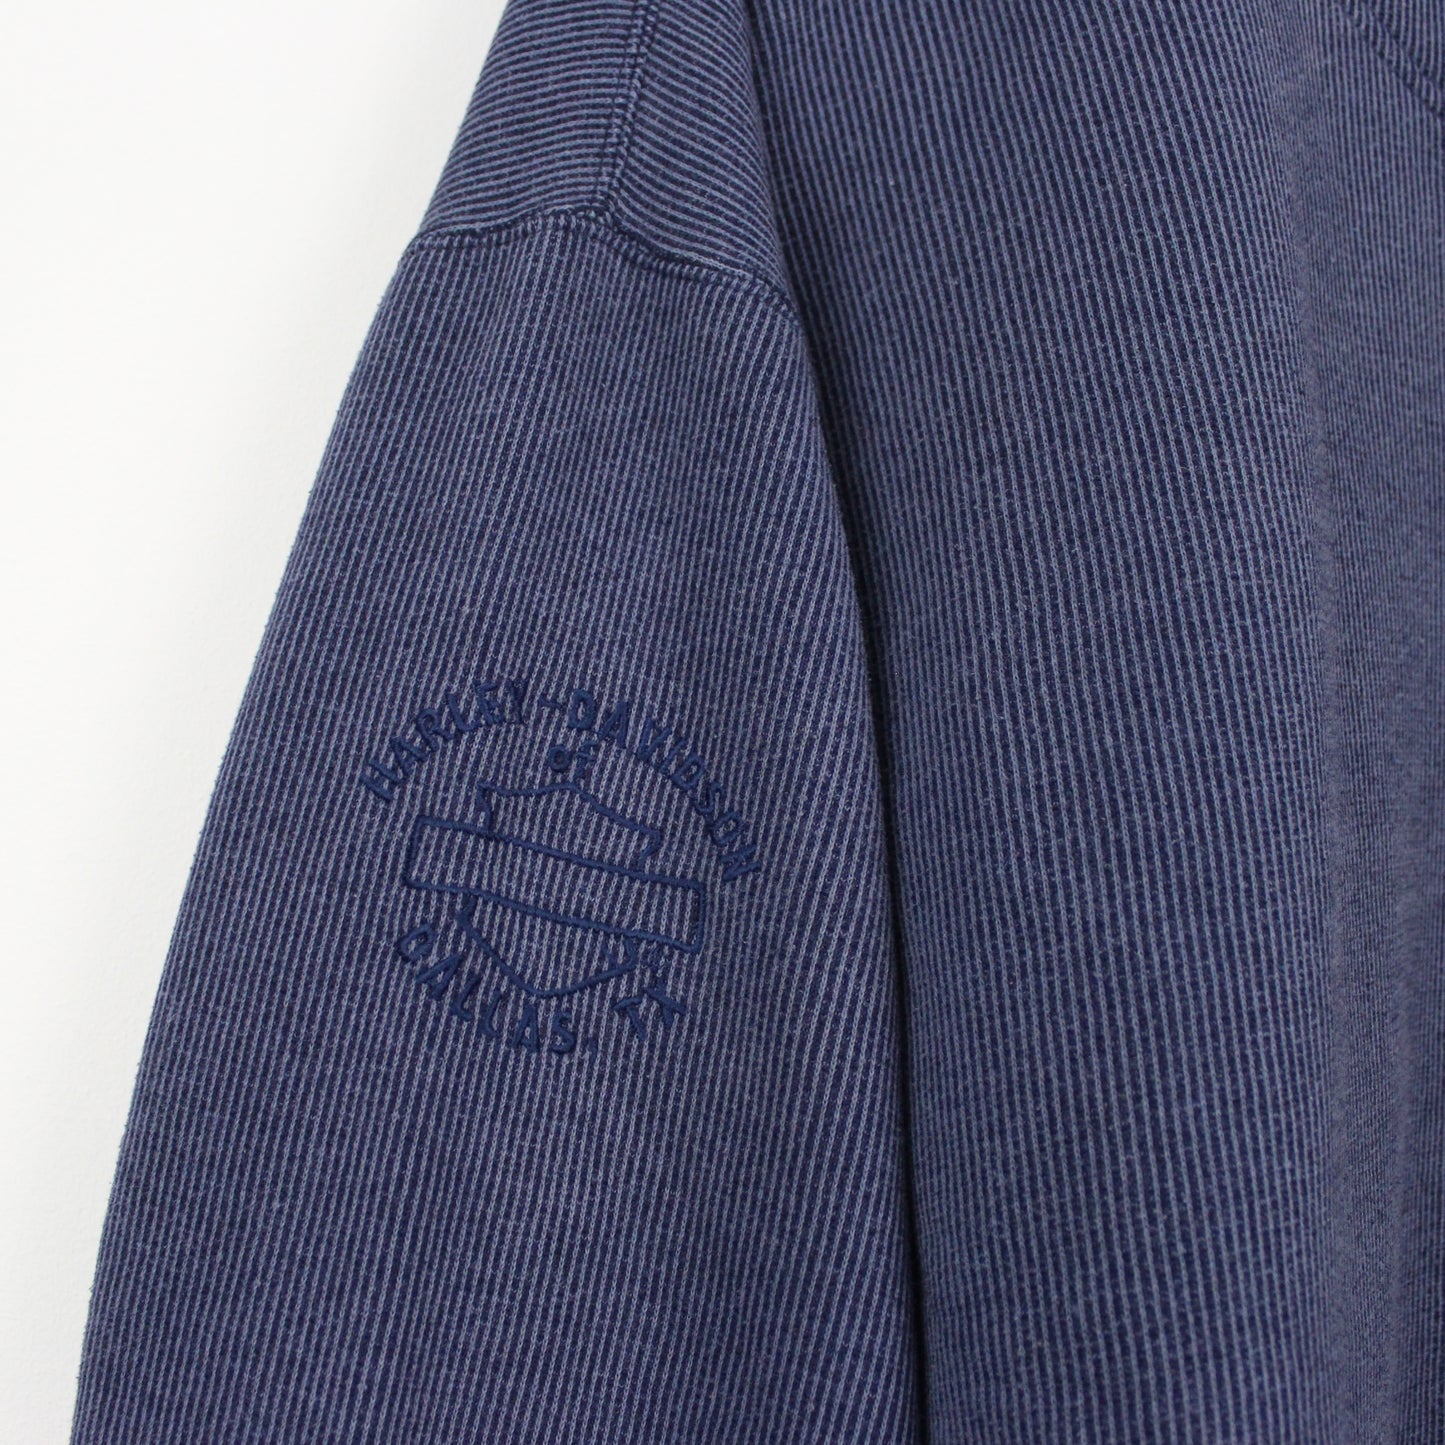 Harley Davidson Blue Sweatshirt, Dallas Texas USA Embroidery (L)